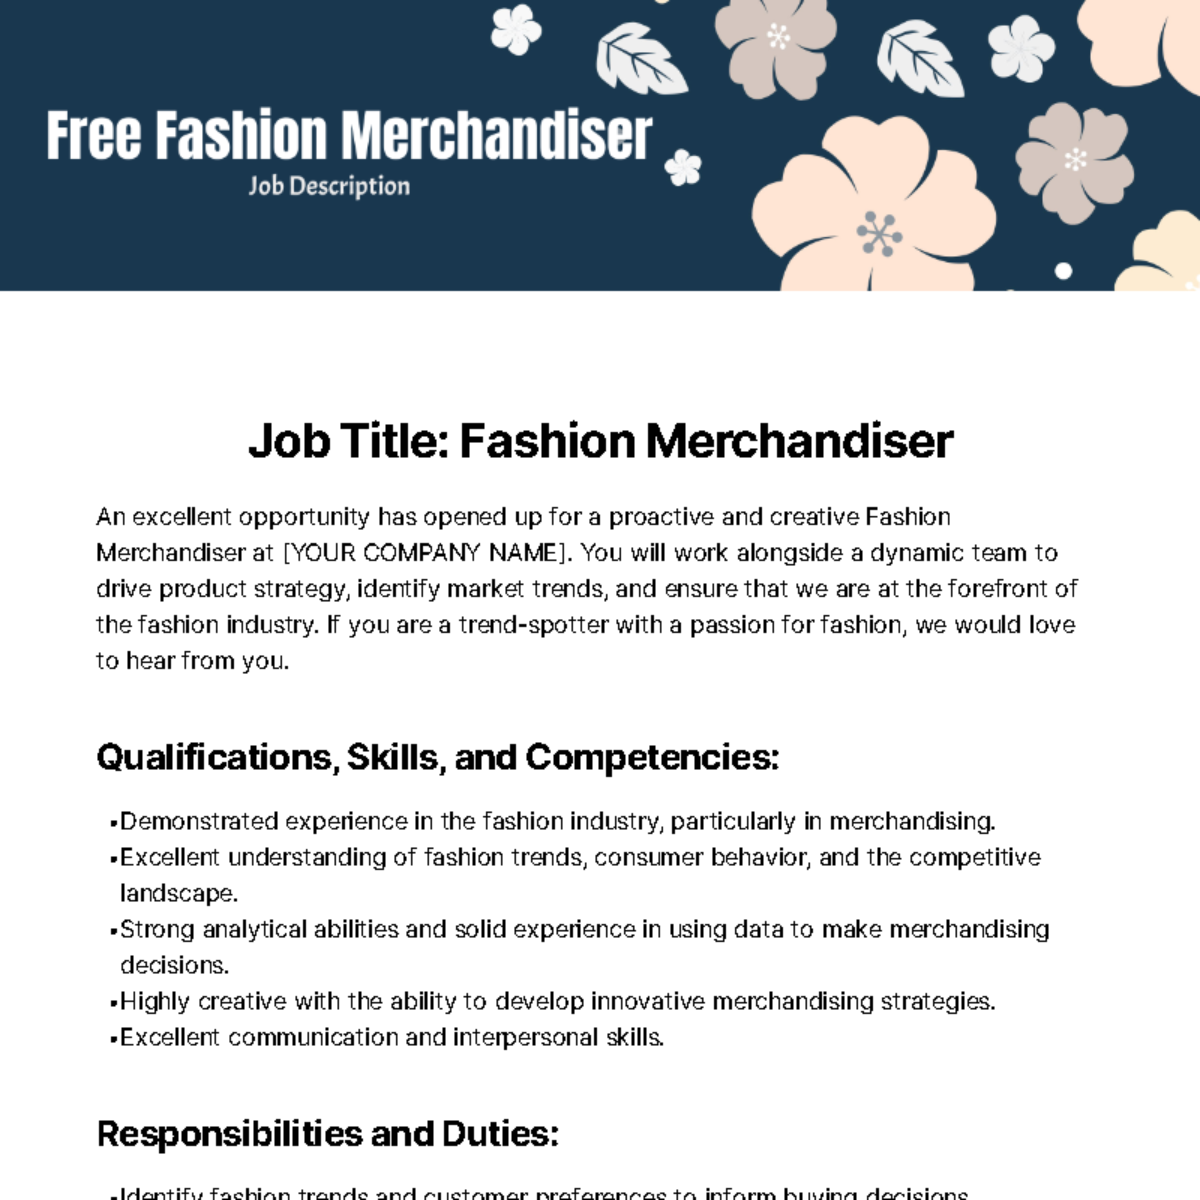 Free Fashion Merchandiser Job Description Template